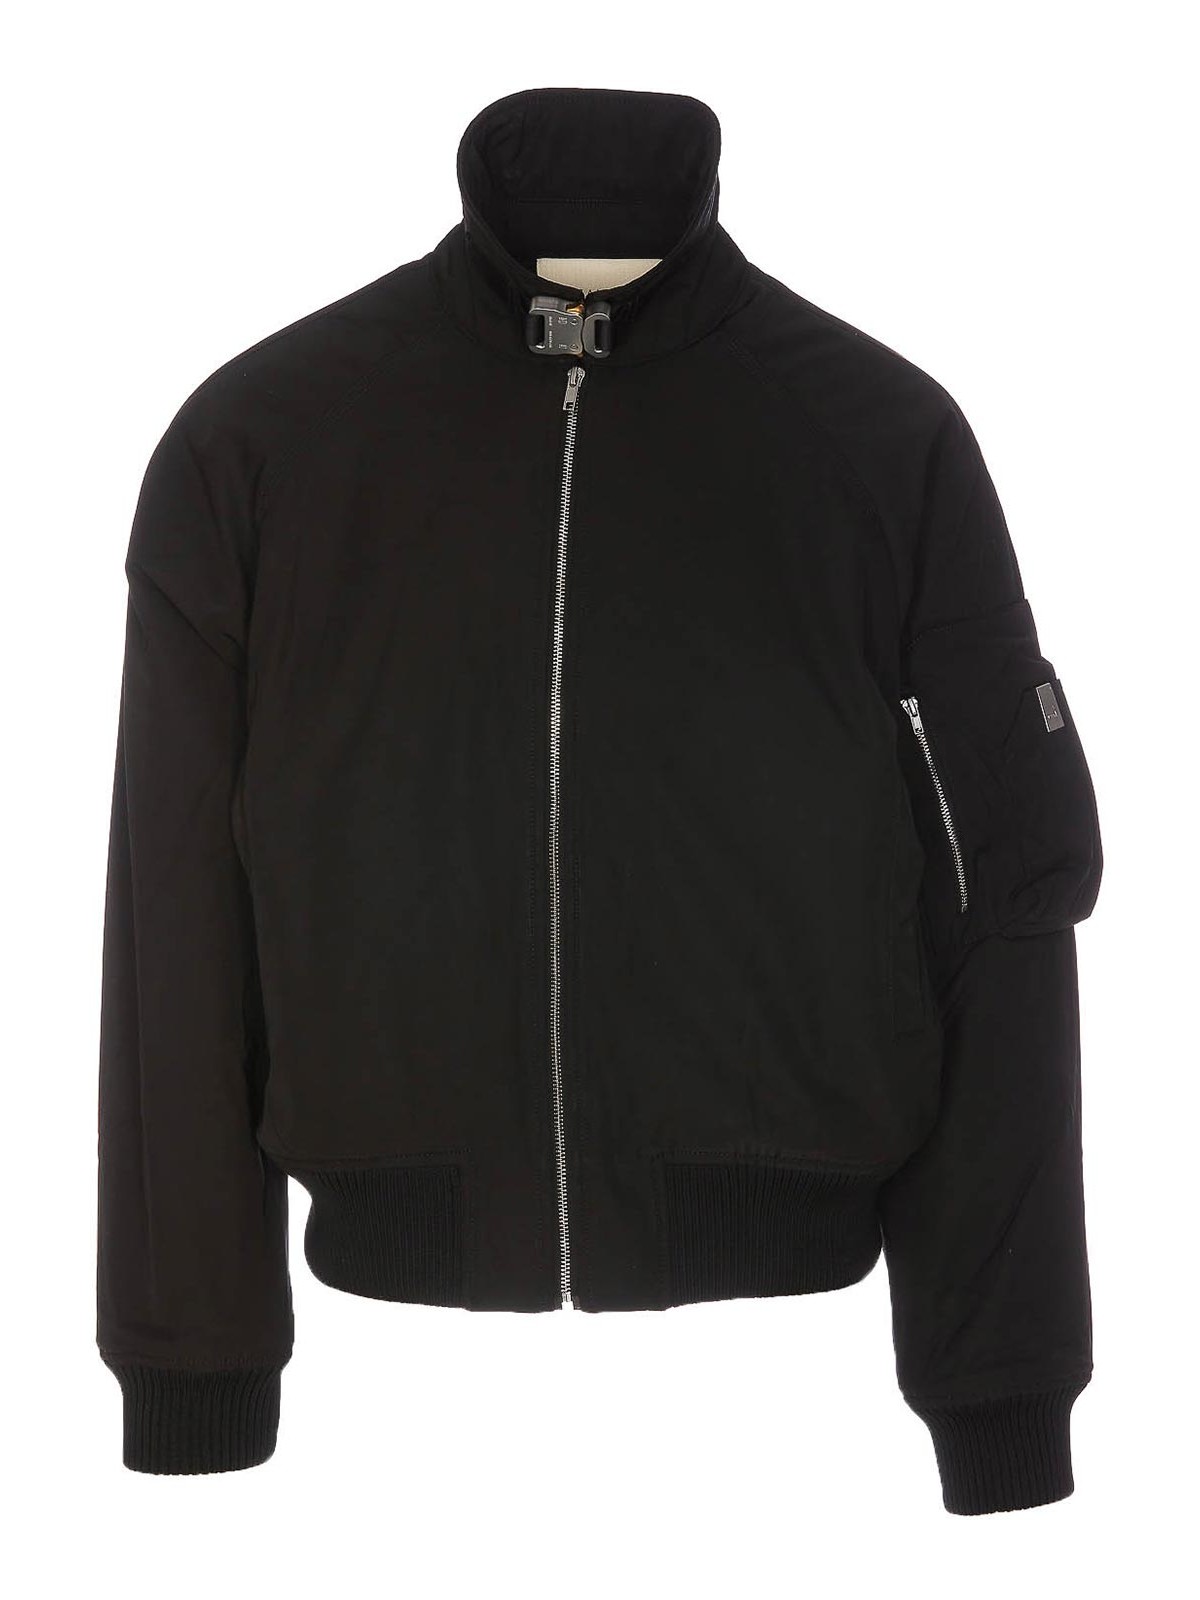 Casual jackets 1017 Alyx 9sm - Logo buckle jacket